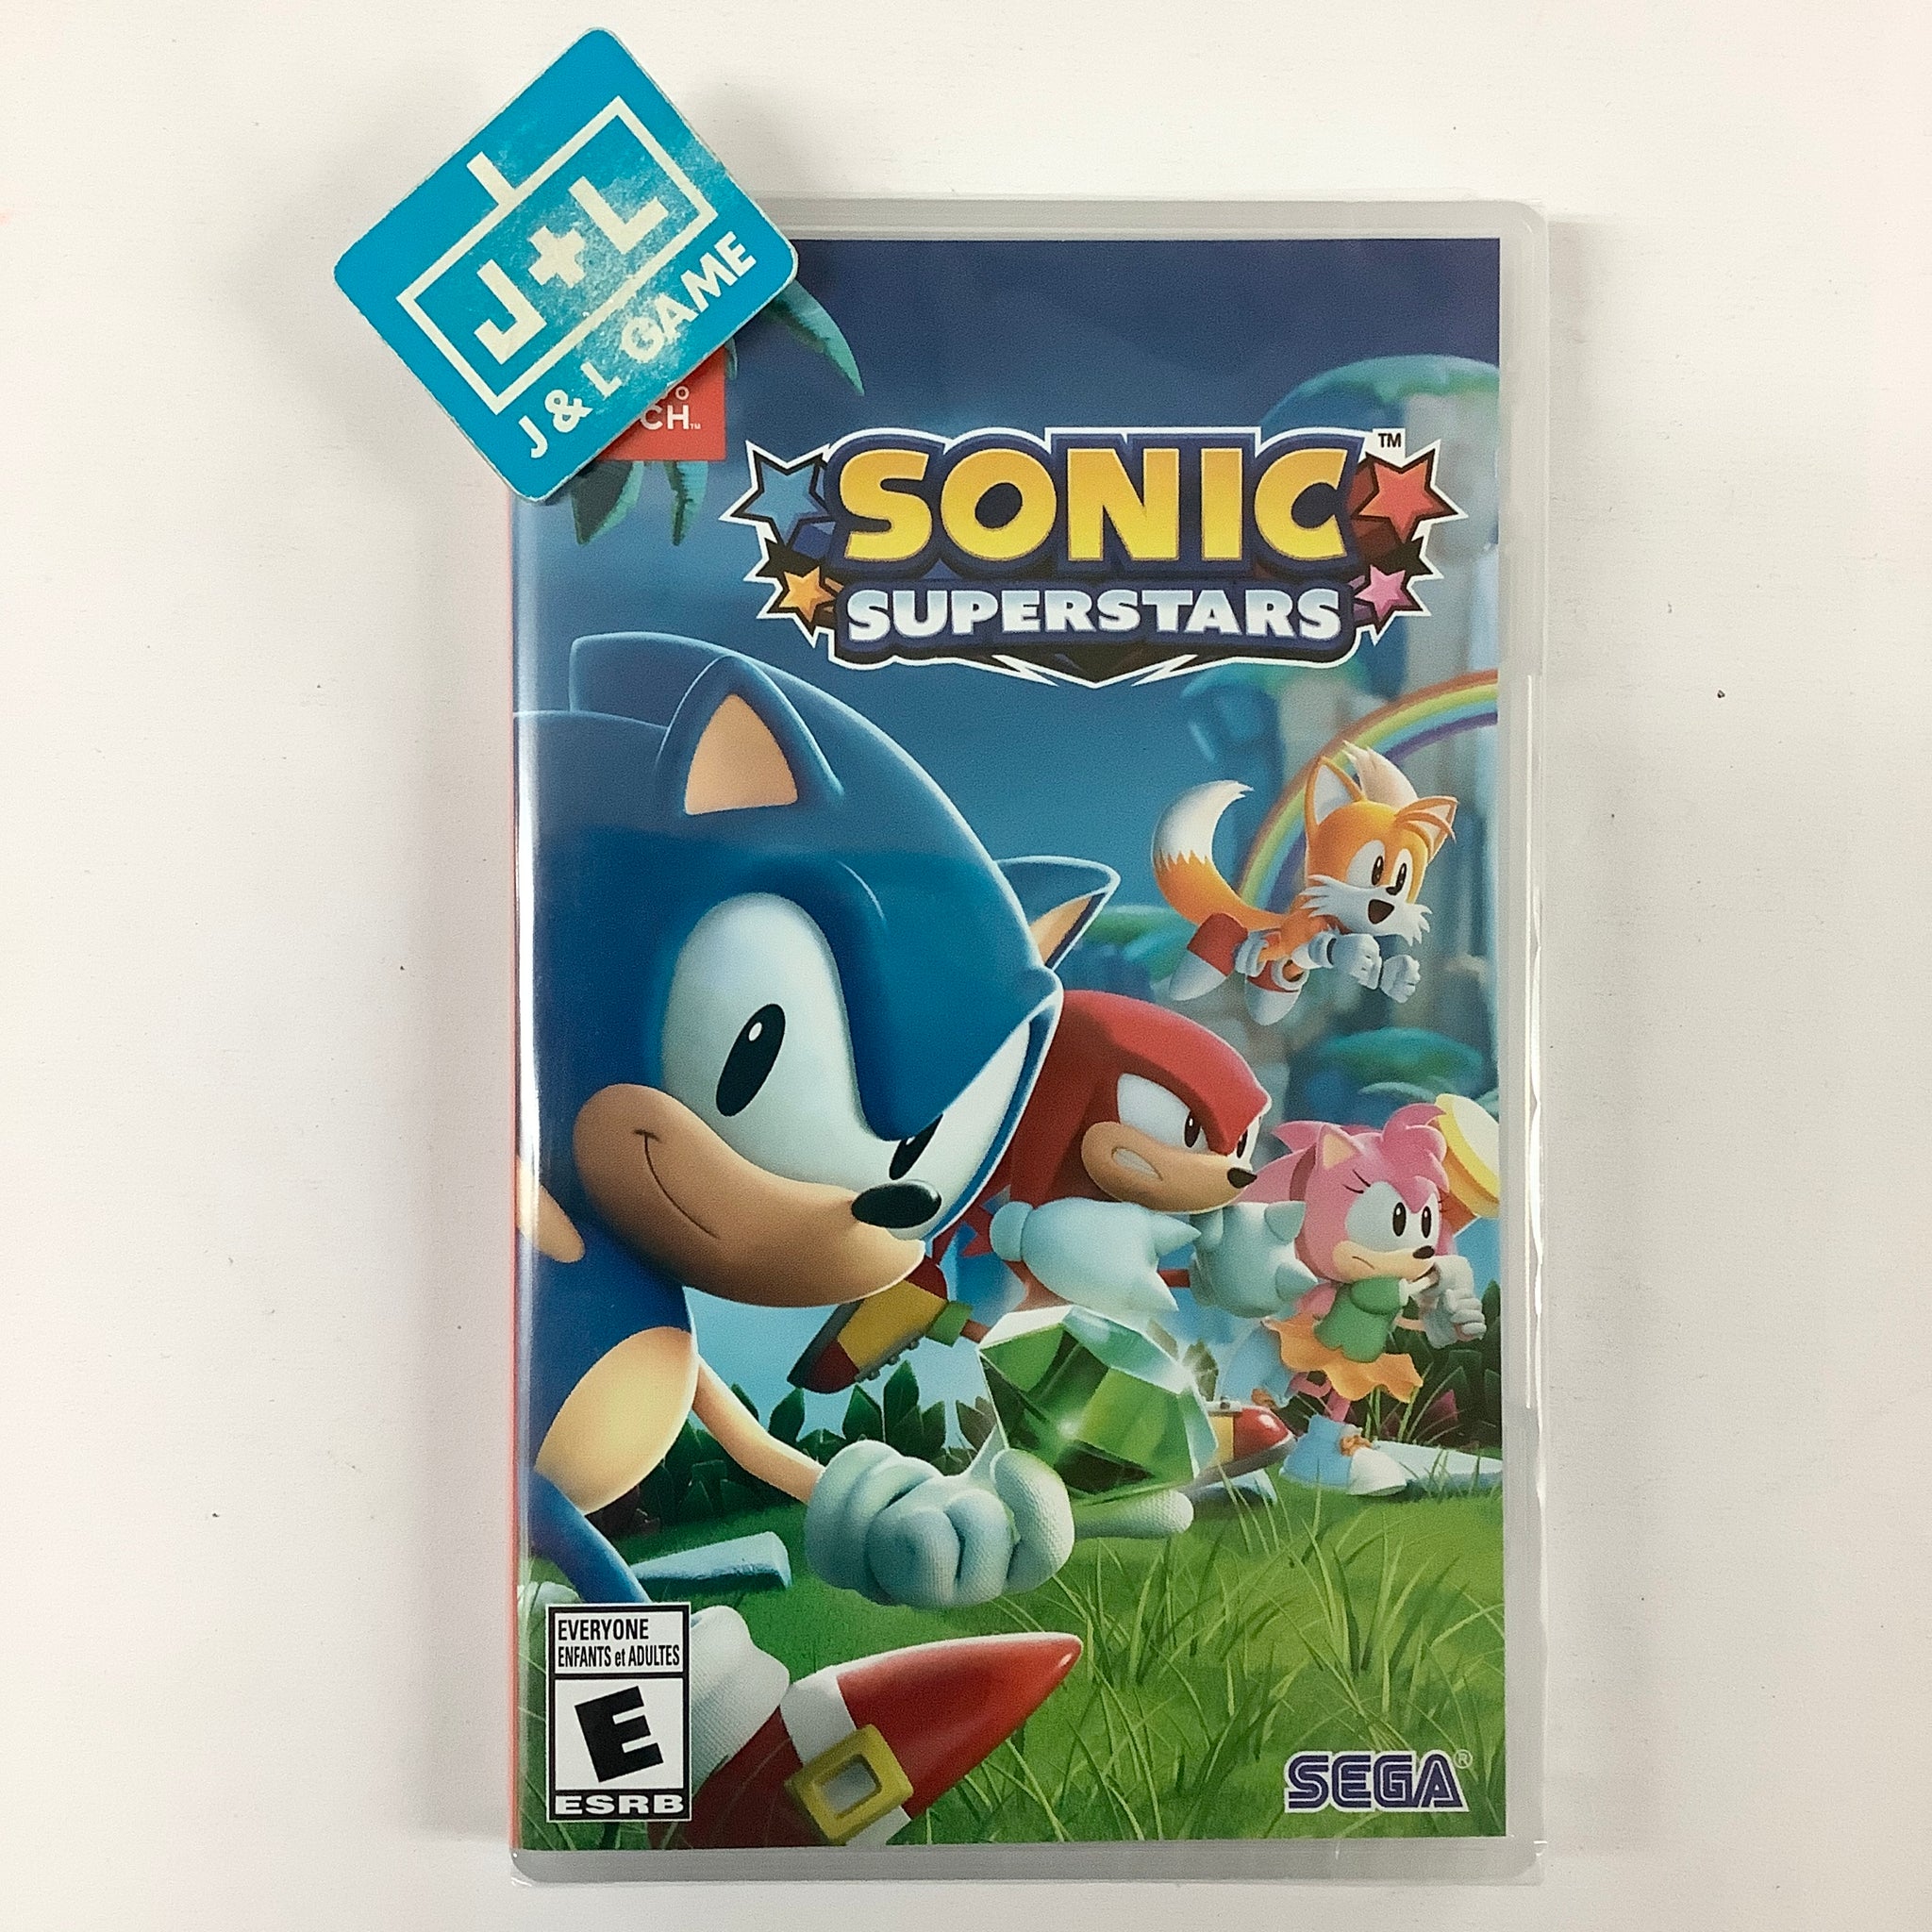 Sonic Superstars for Nintendo Switch